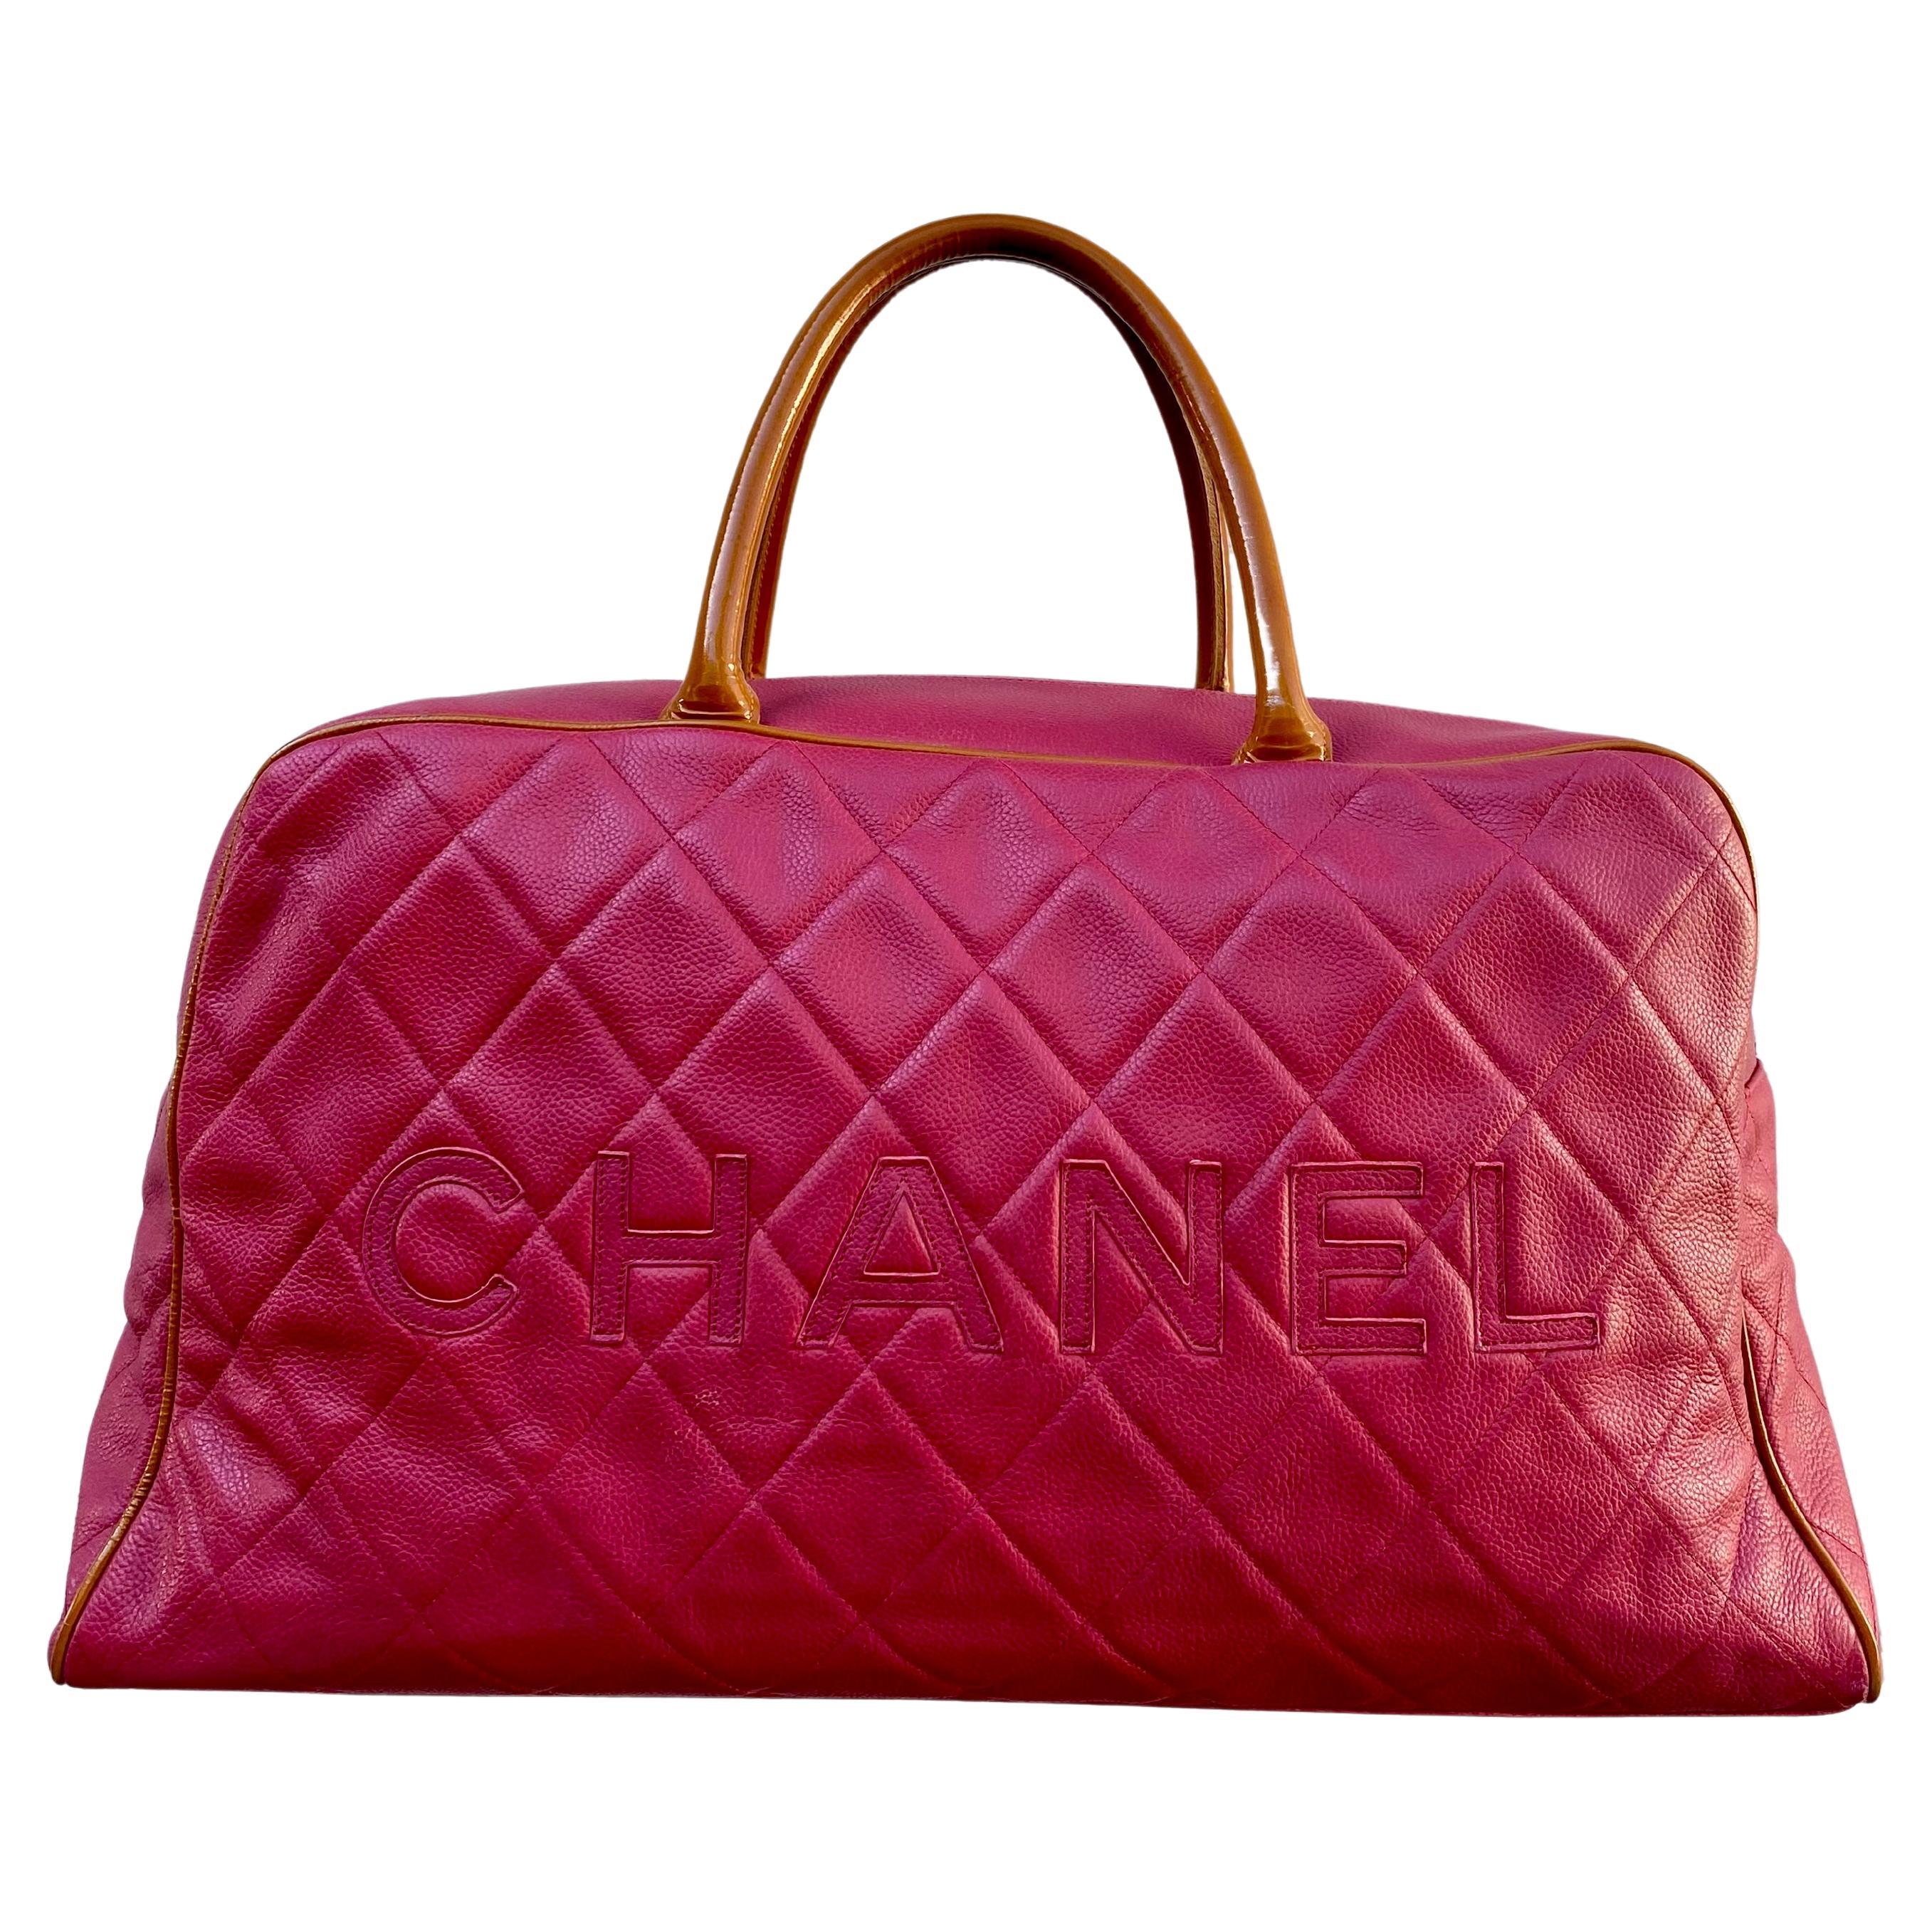 Chanel Shopping Bag Retro - 86 For Sale on 1stDibs